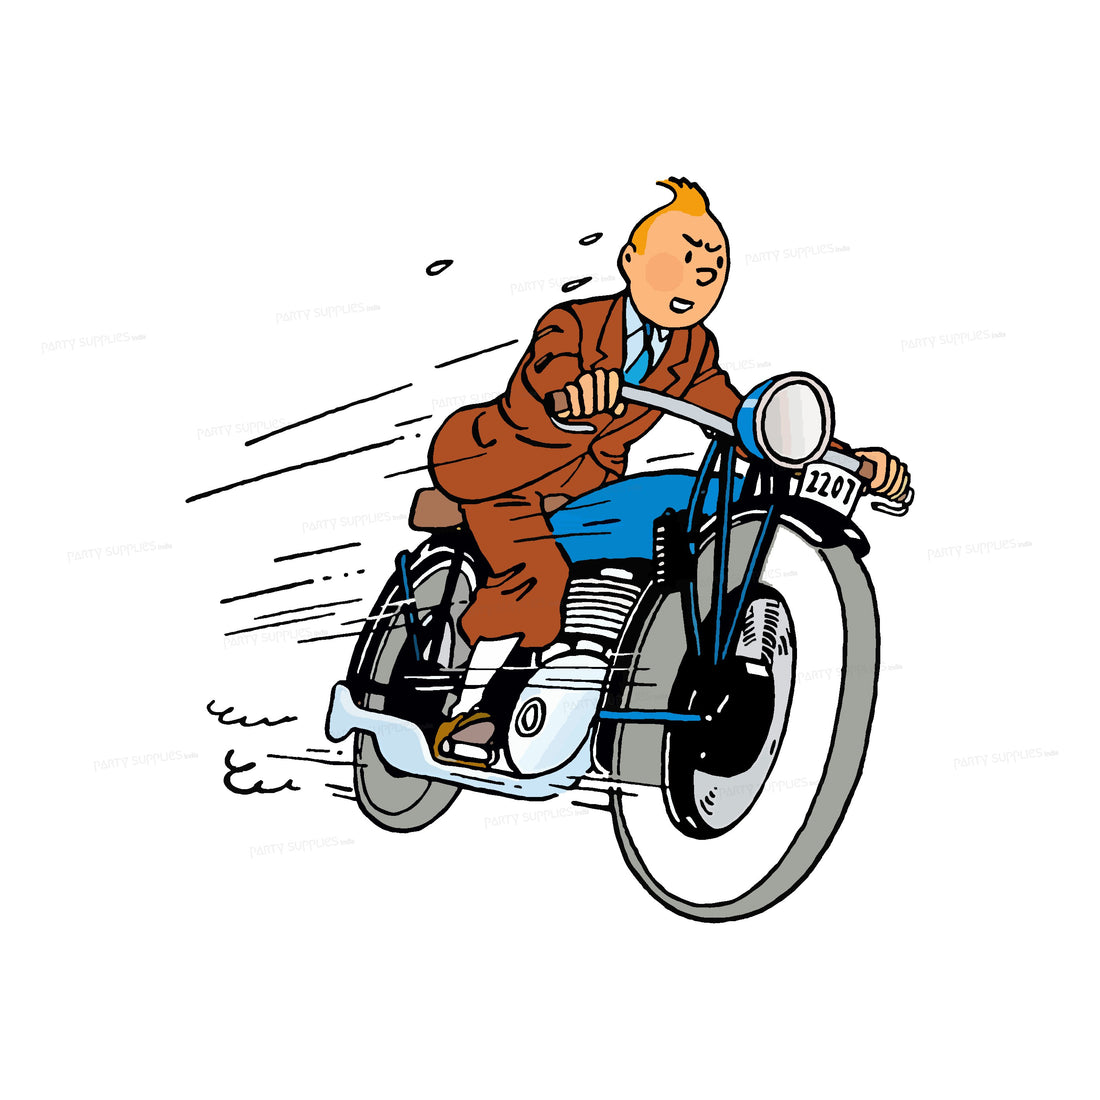 PSI Tintin Theme Cutout - 11